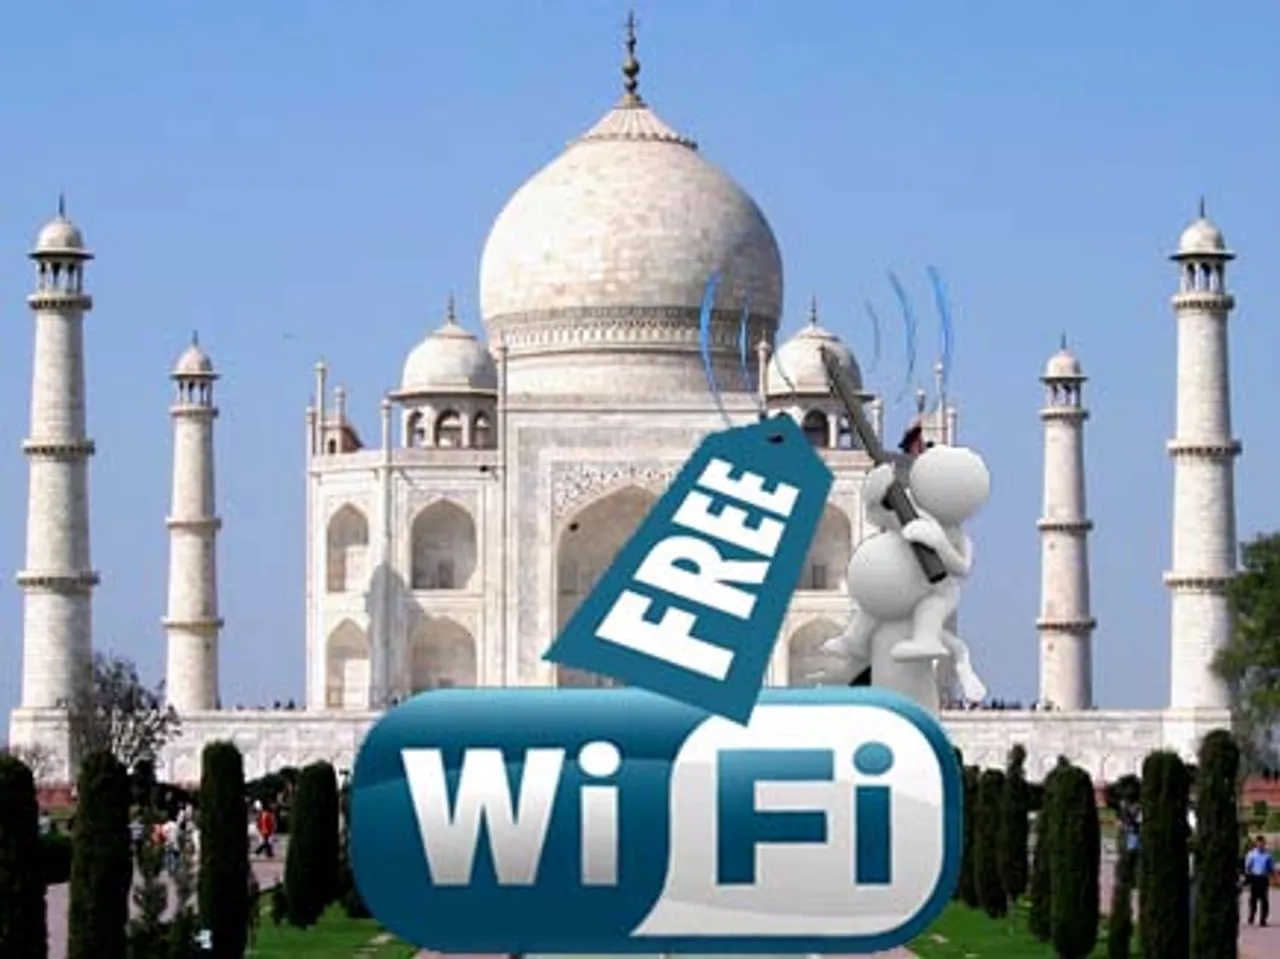 Now enjoy free Wi-Fi at Taj Mahal